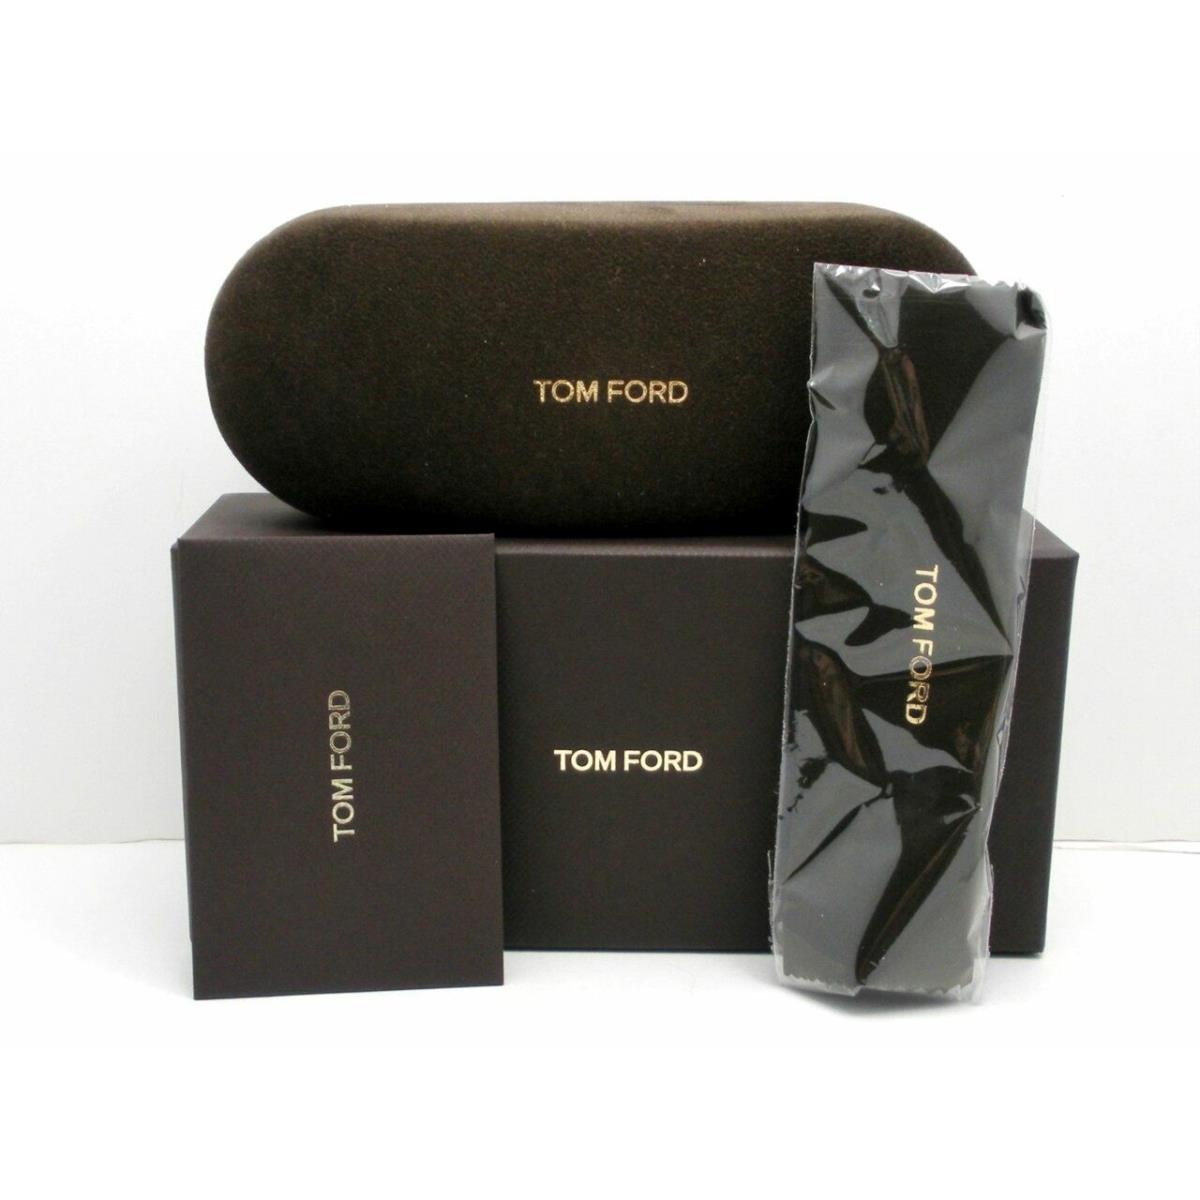 Tom Ford sunglasses  - Frame: Shiny Black, Lens: Blue Block 0